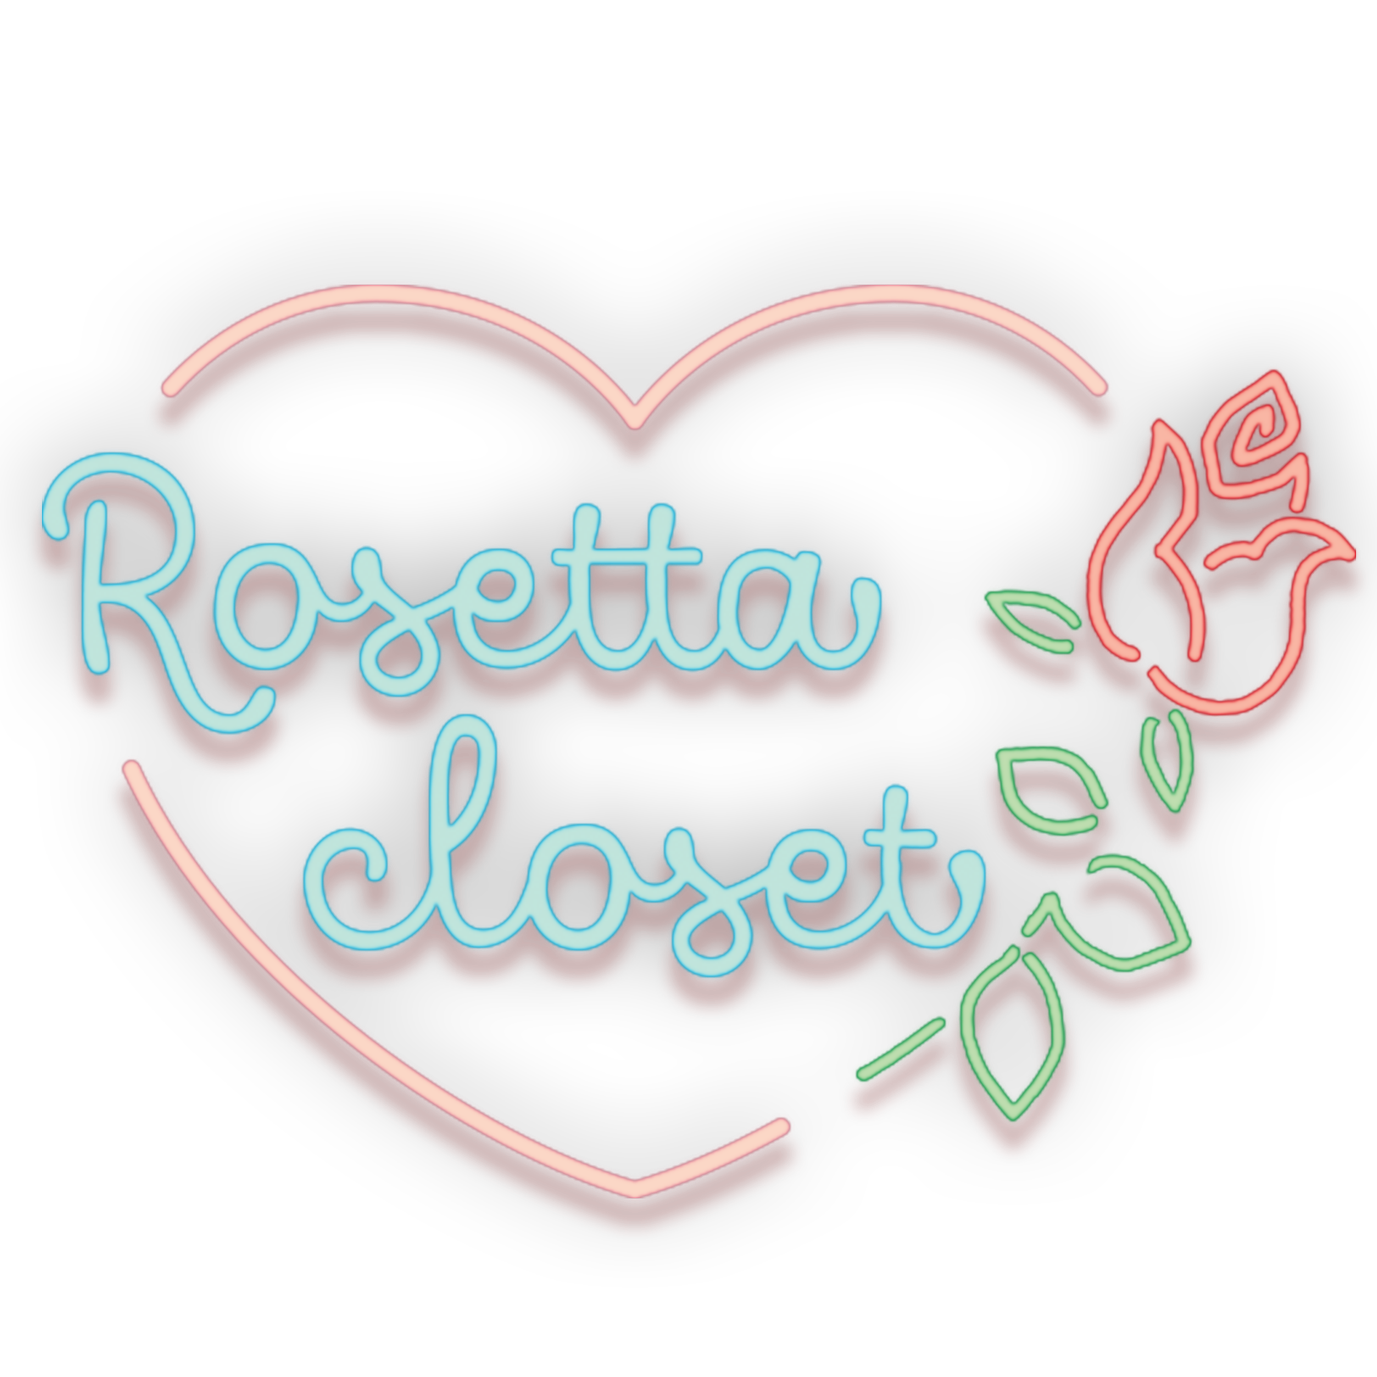 Rosetta closet® ロゼッタクローゼット フレンチガーリーな可愛いハンドメイドアクセサリーブランド